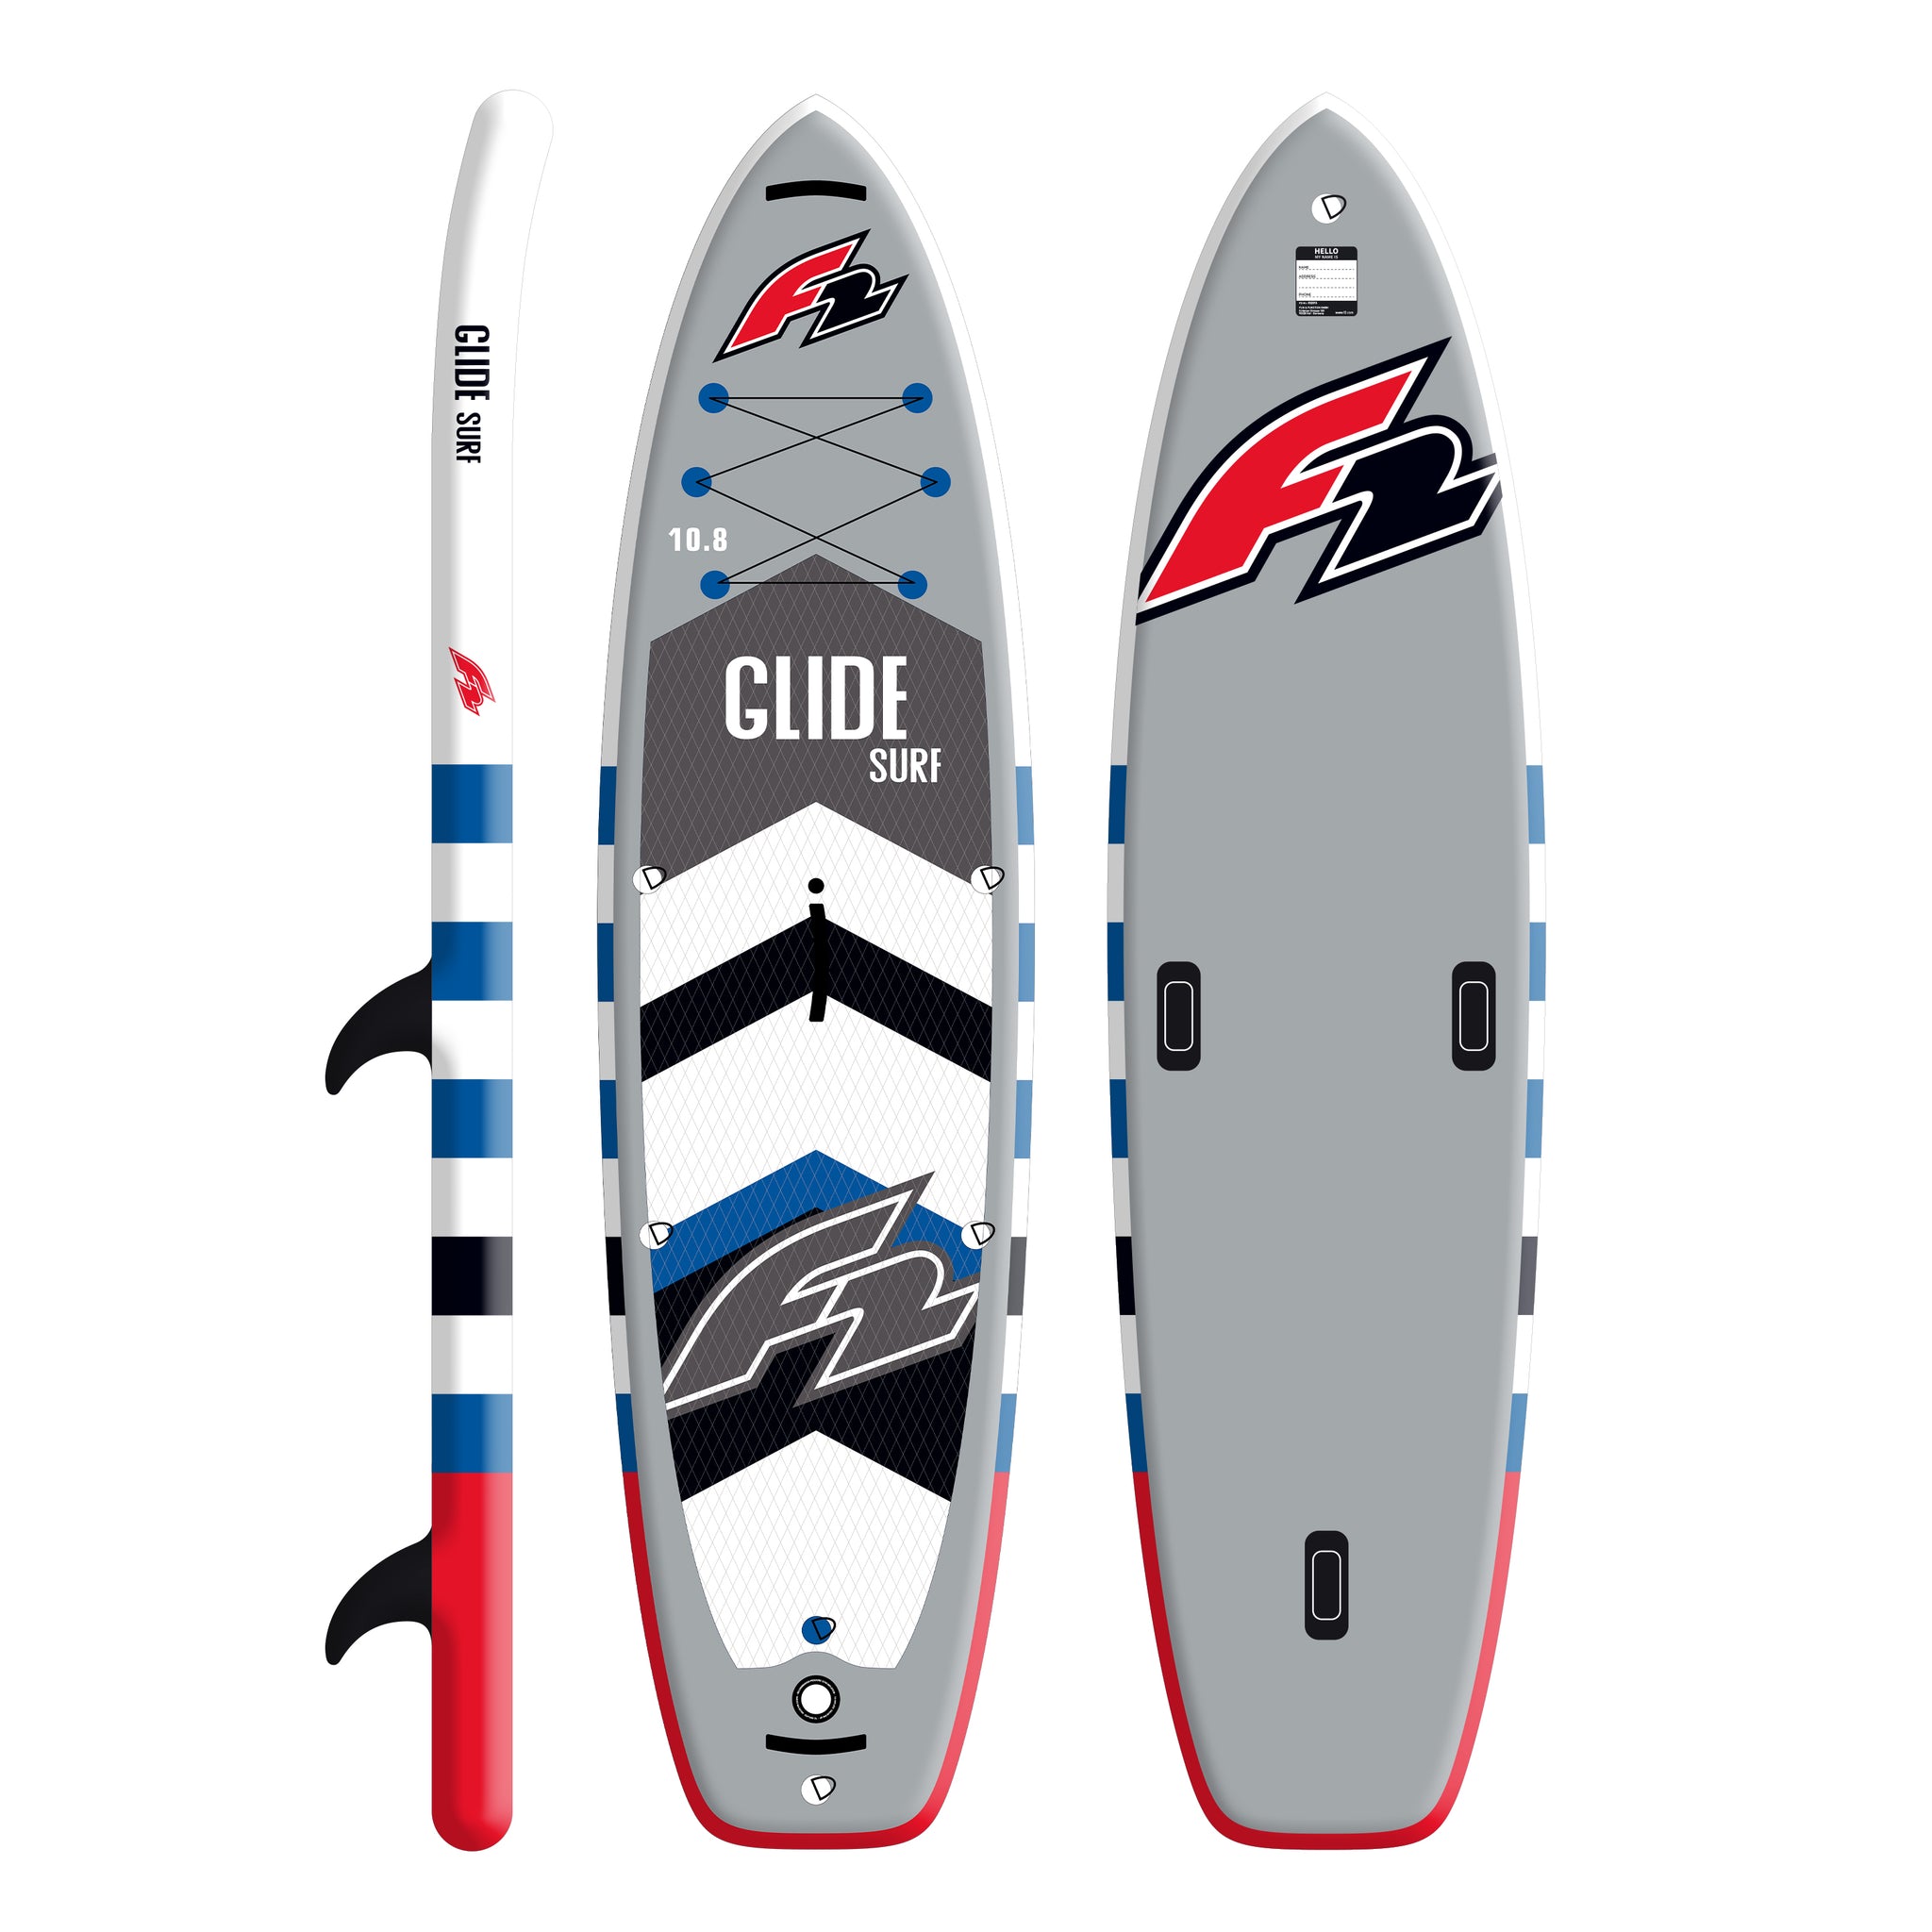 F2 Glide Surf 10.8/11.7 סאפ מתנפח איכותי (אפשרות לגלישת רוח) עם משוט